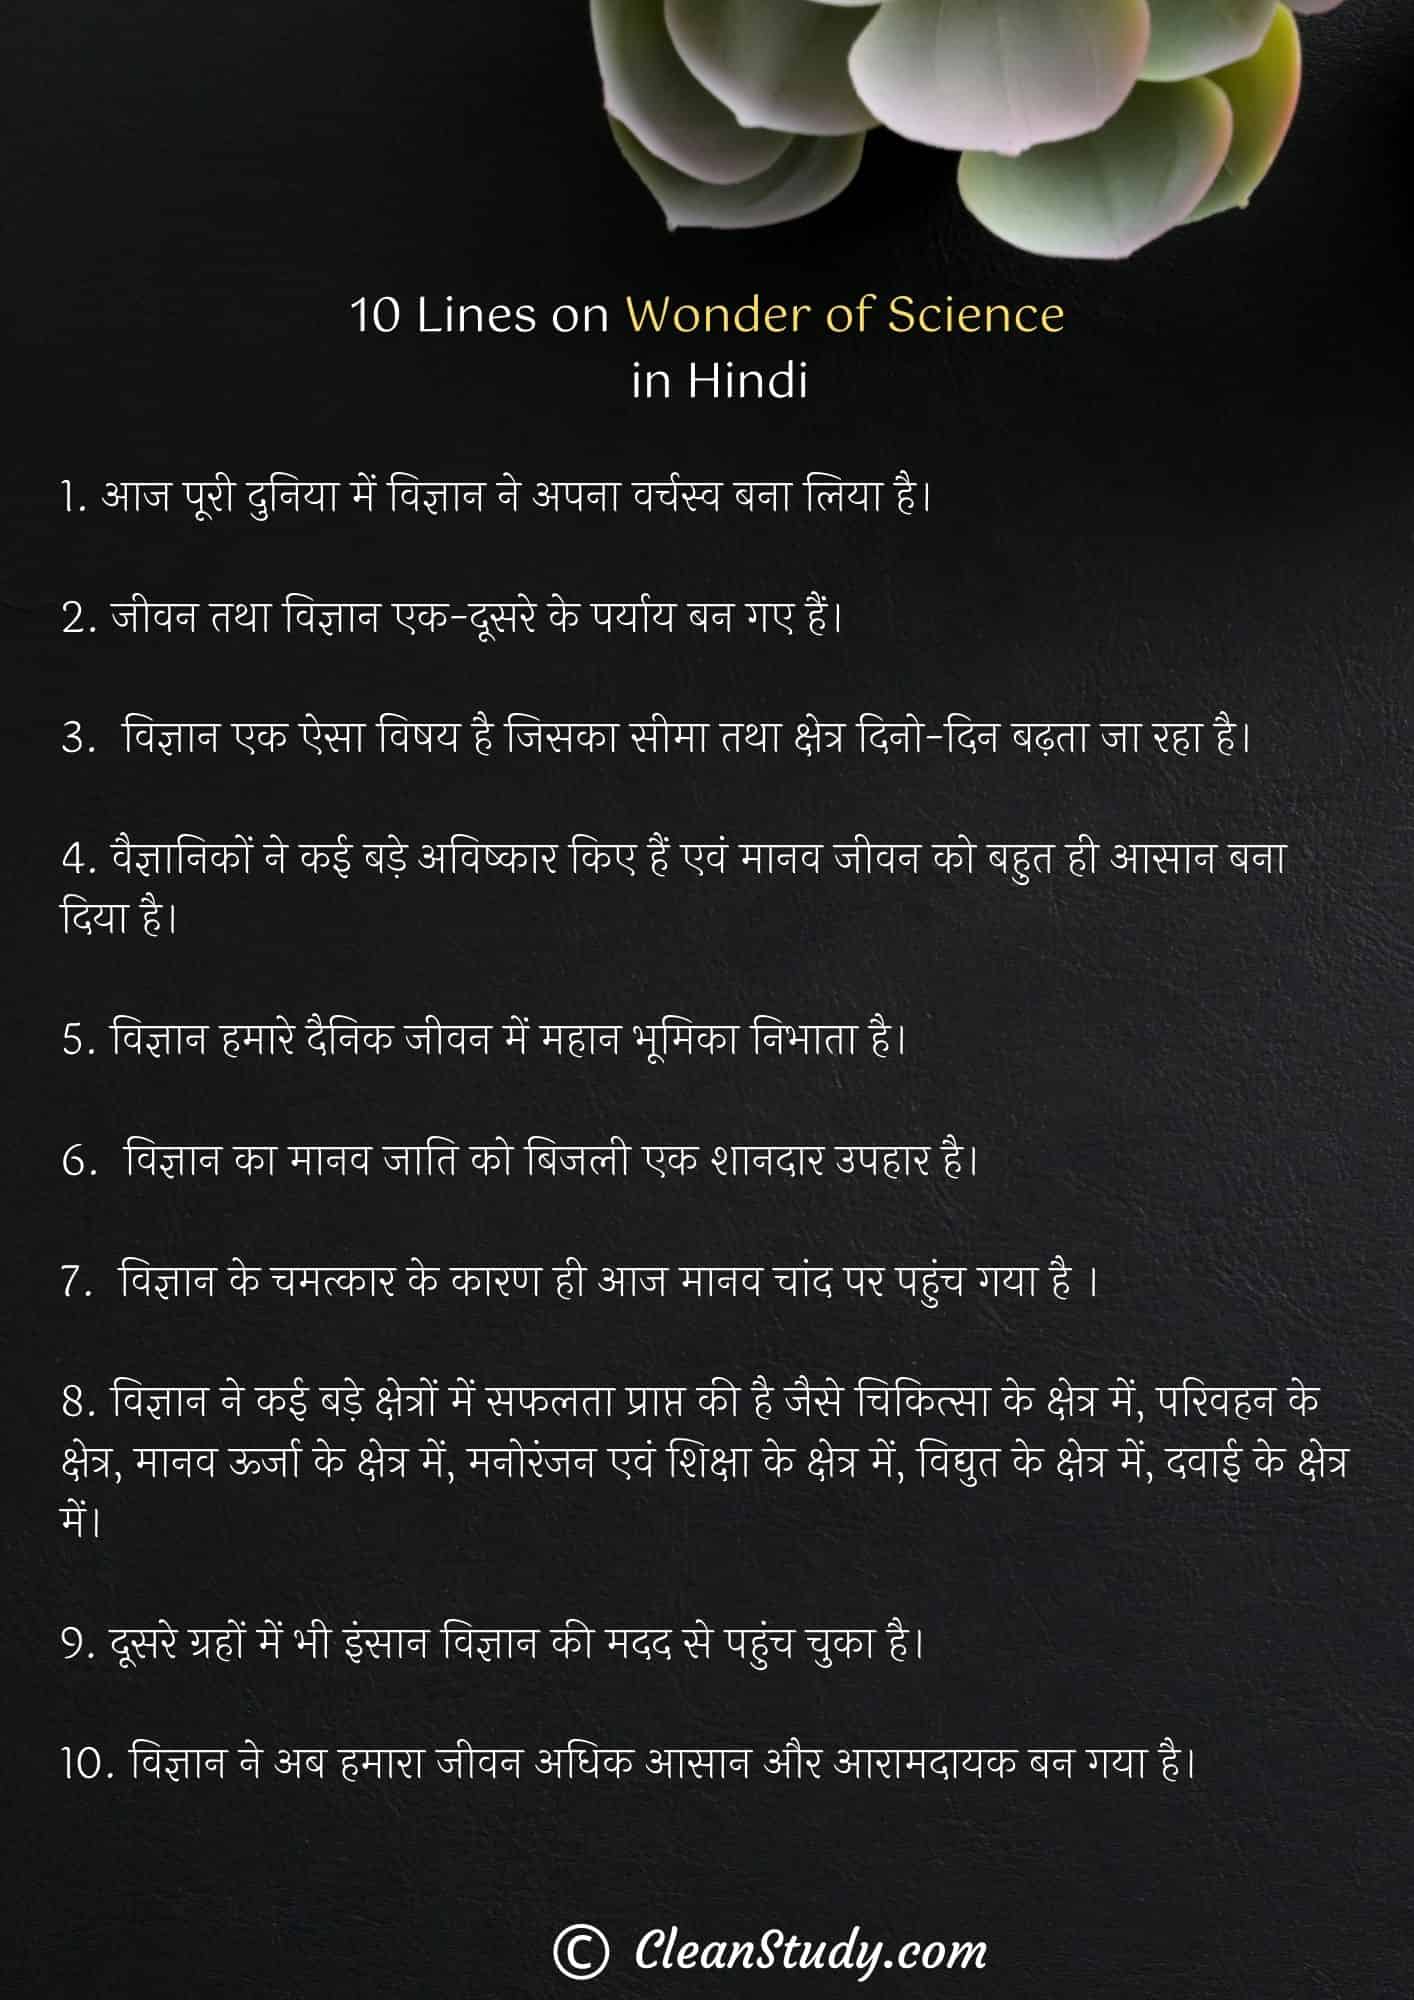 10 Lines on Wonder of Science in Hindi